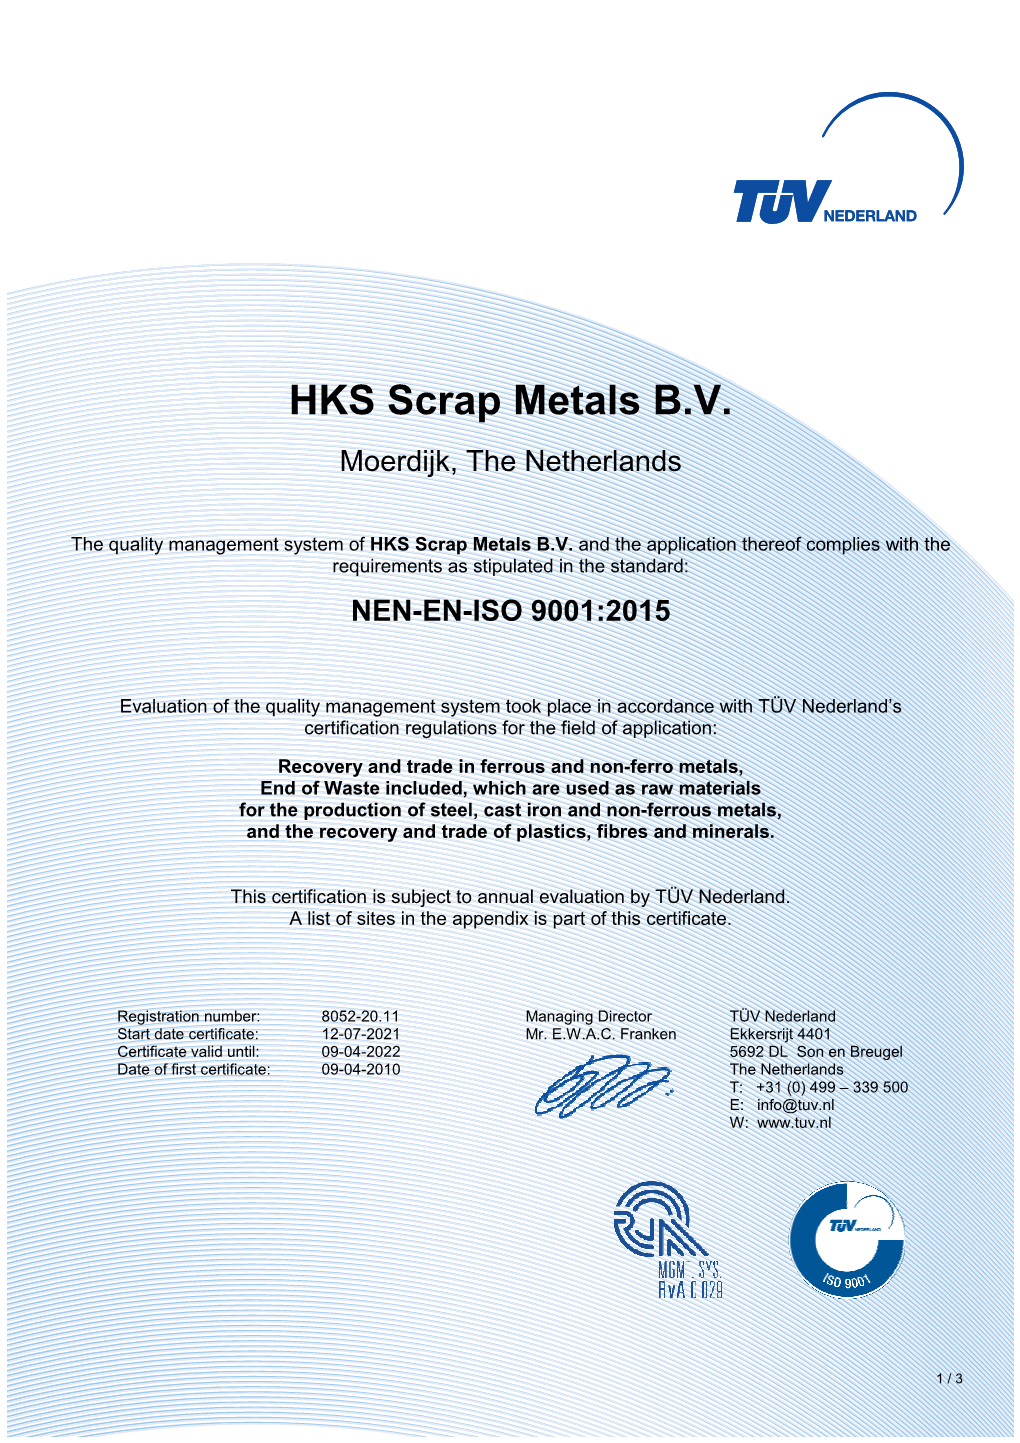 HKS Scrap Metals B.V. Moerdijk, the Netherlands